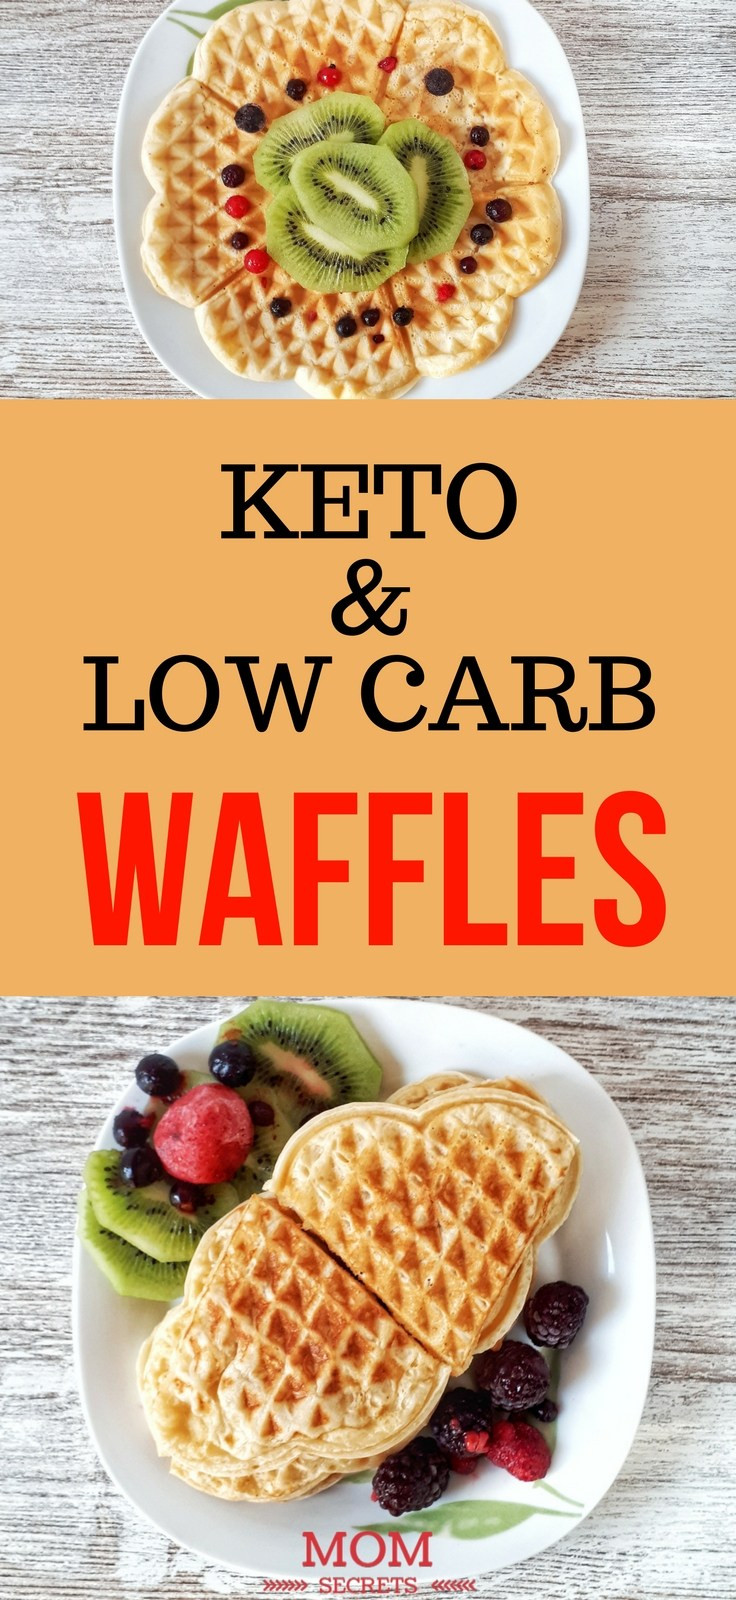 Keto Breakfast Easy On The Go
 Quick Keto Breakfast the Go 15 Top Ideas for Fat